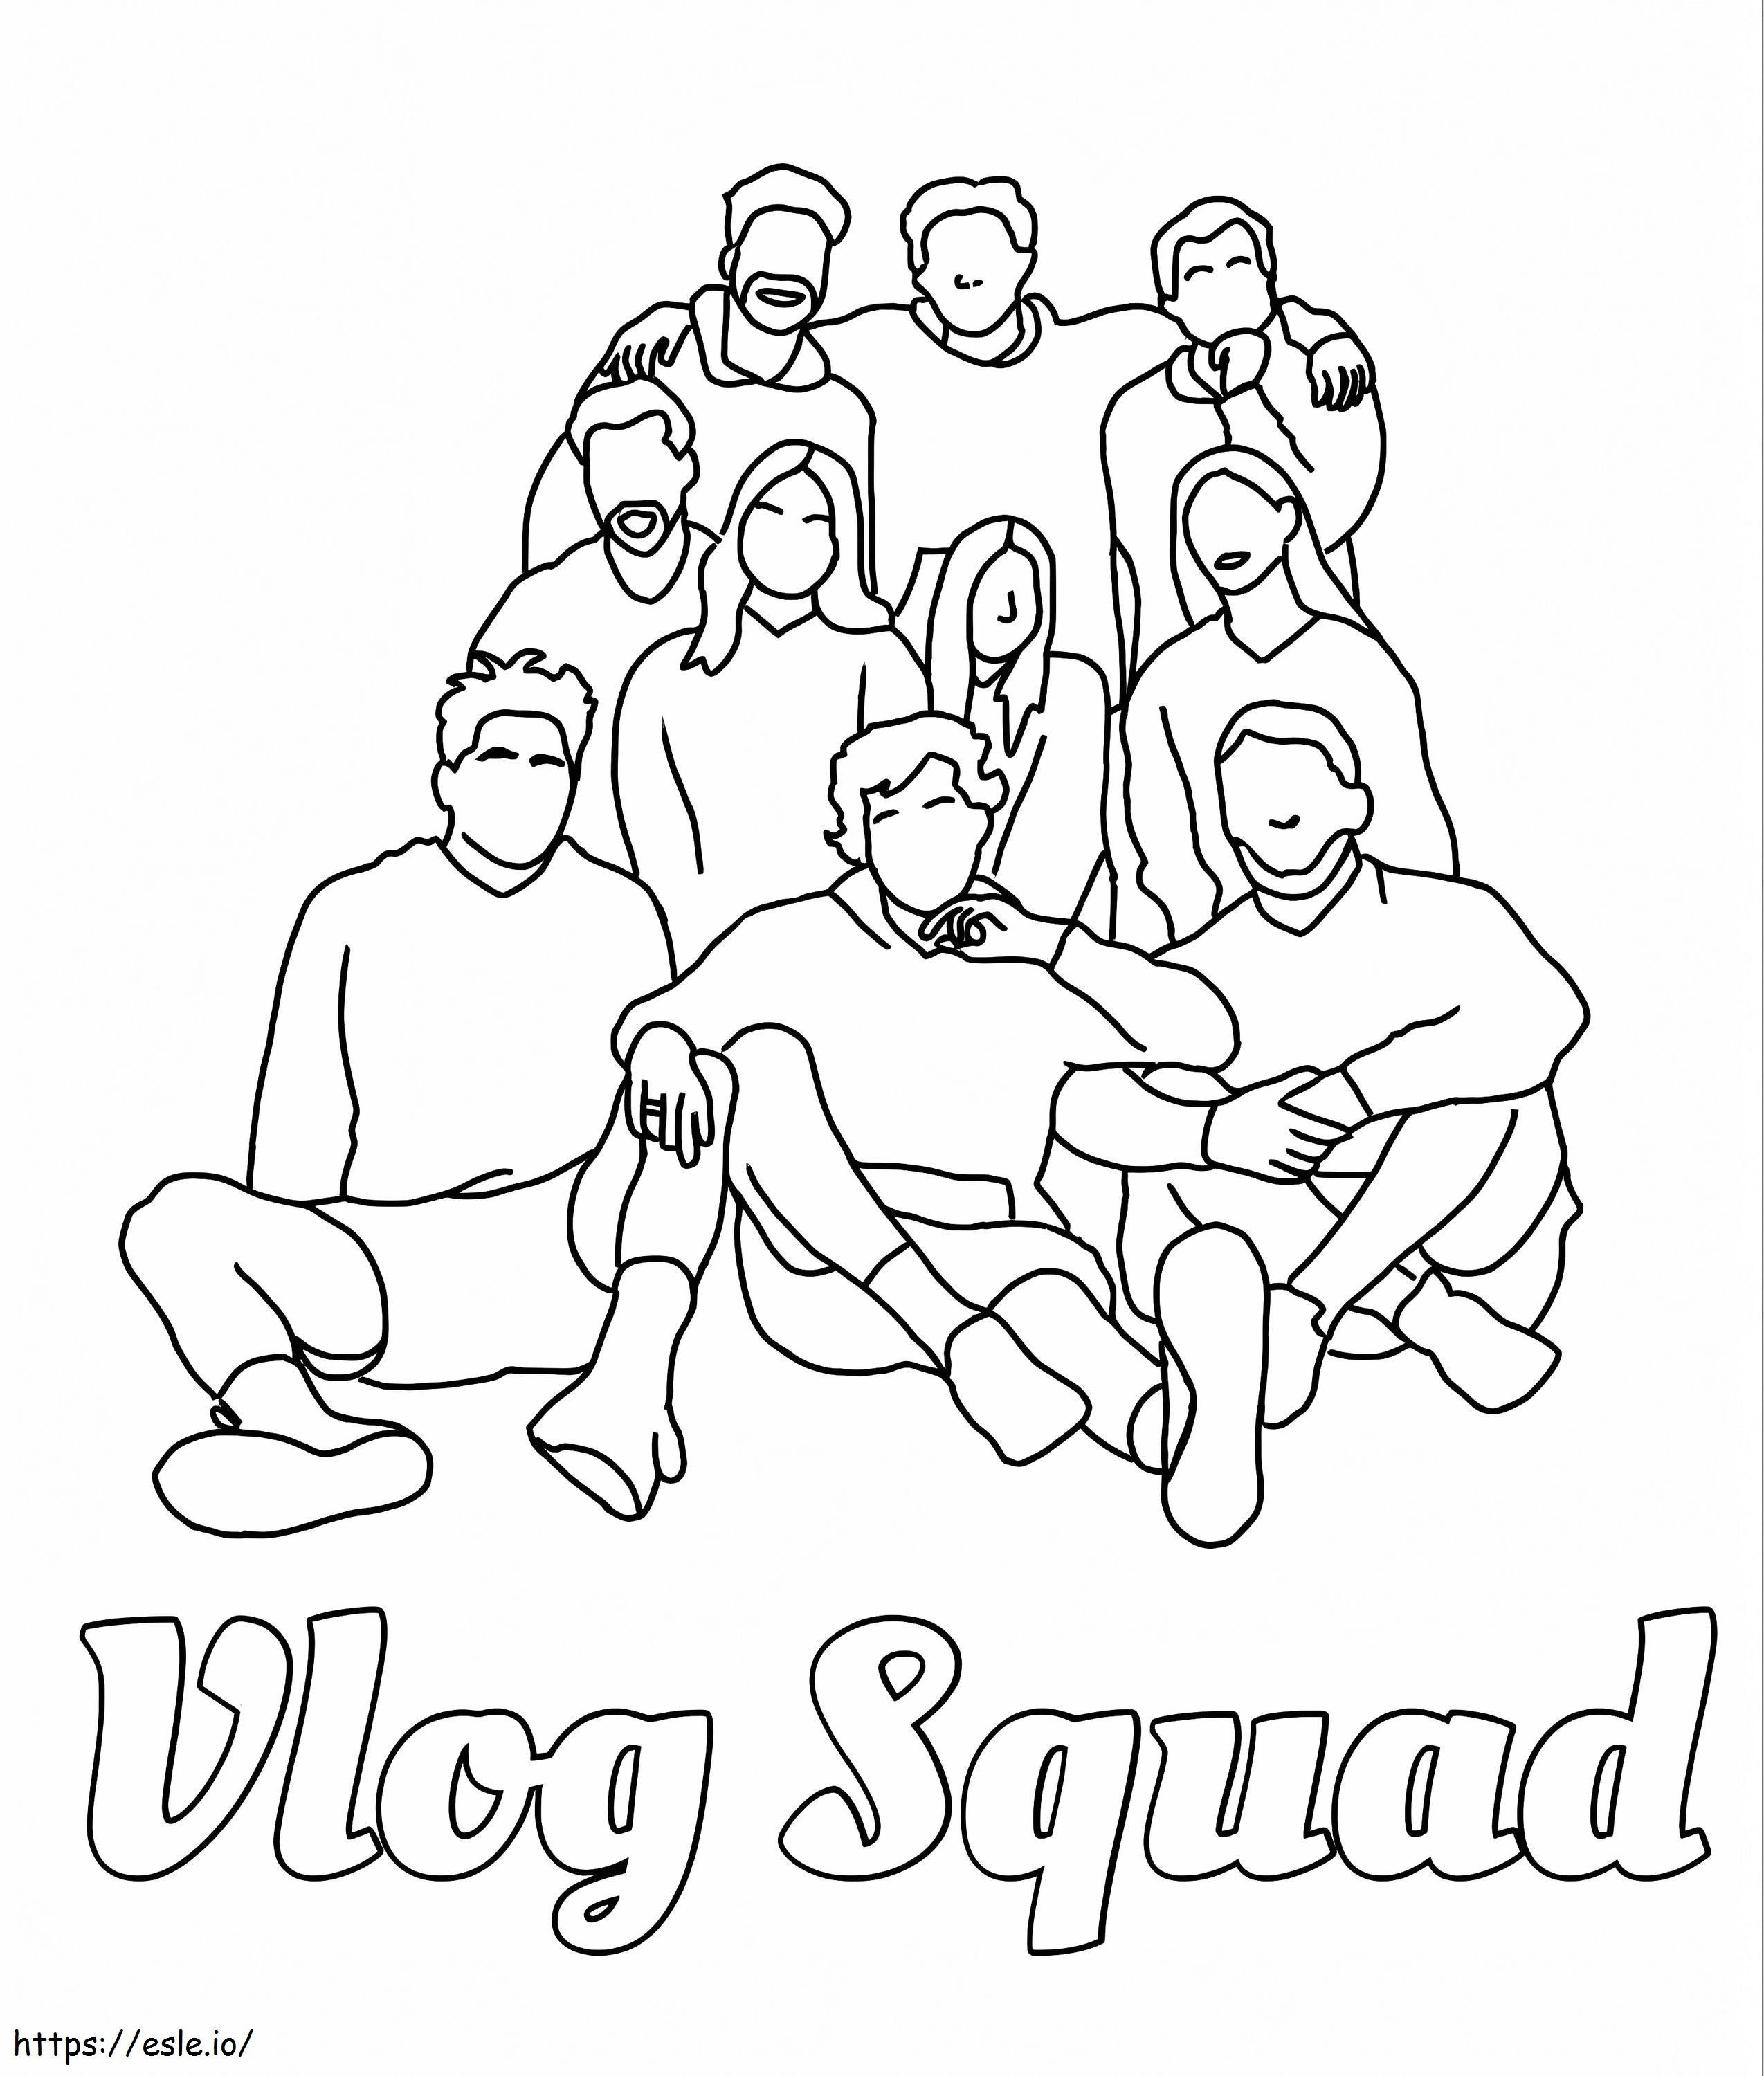 Vlog Squad TikTok de colorat